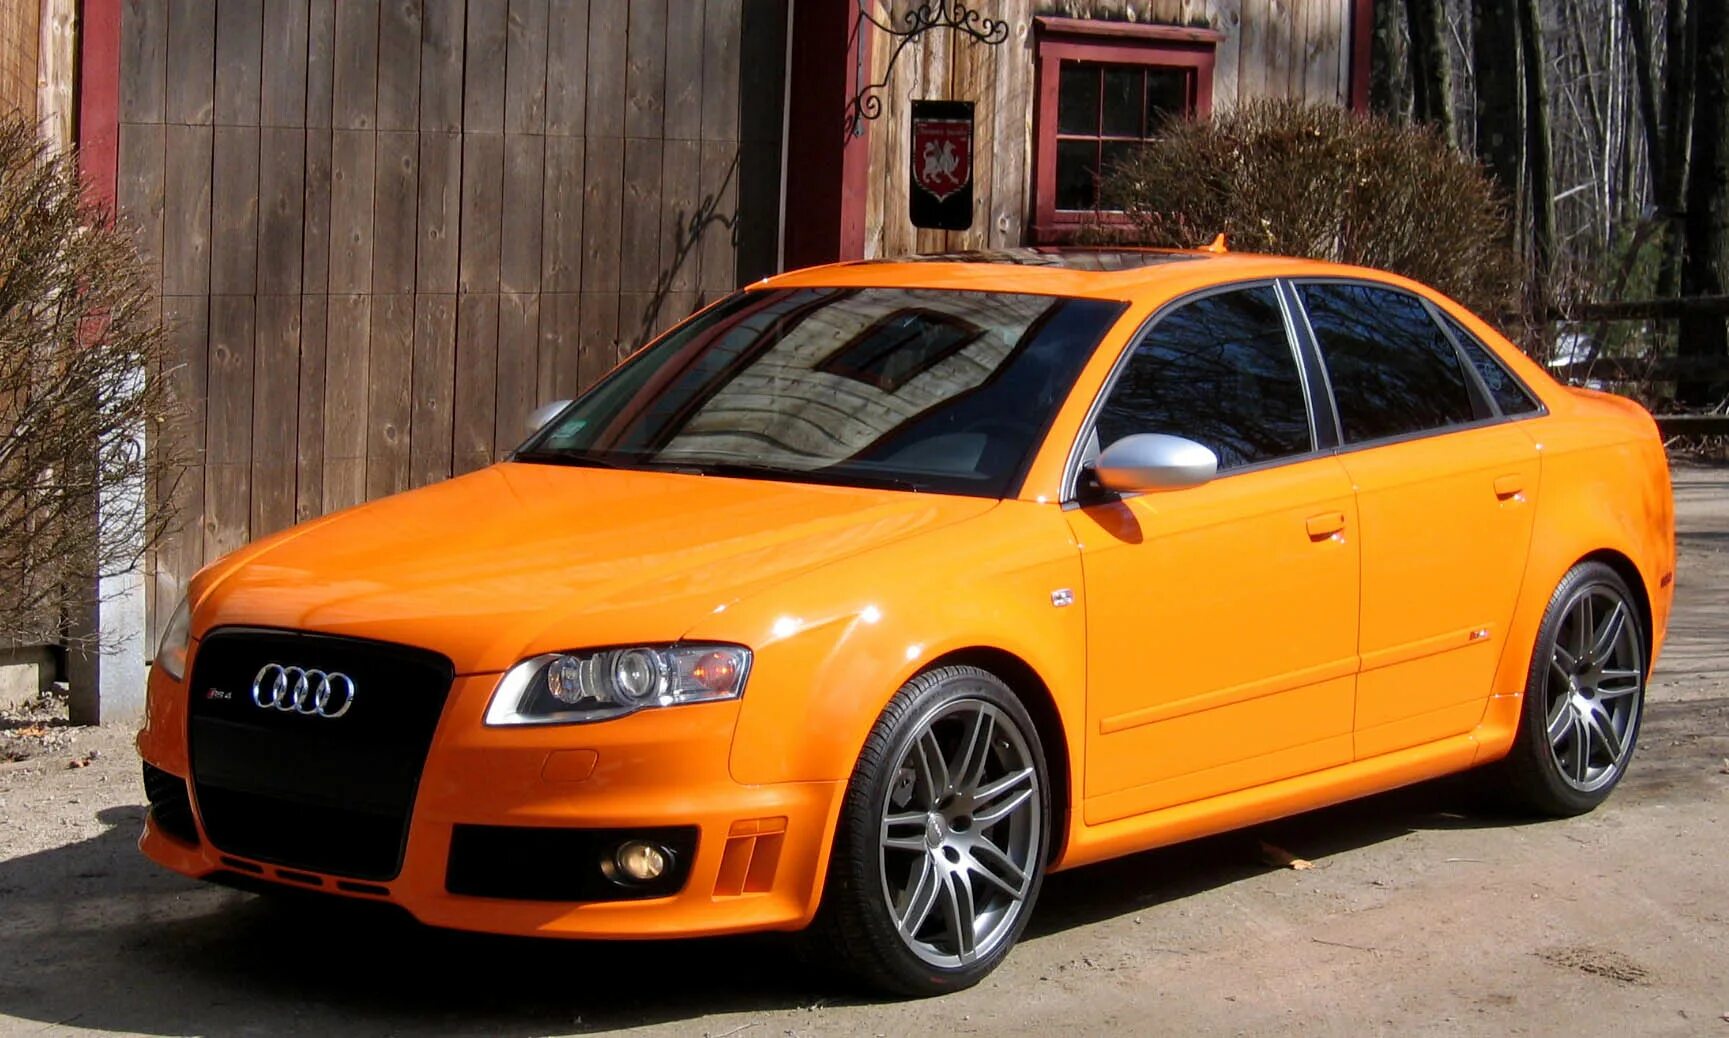 Купить ауди а4 б. Audi rs4 b6. Ауди а4 б7 желтая. Audi a4 b6. Audi a4 оранжевая.